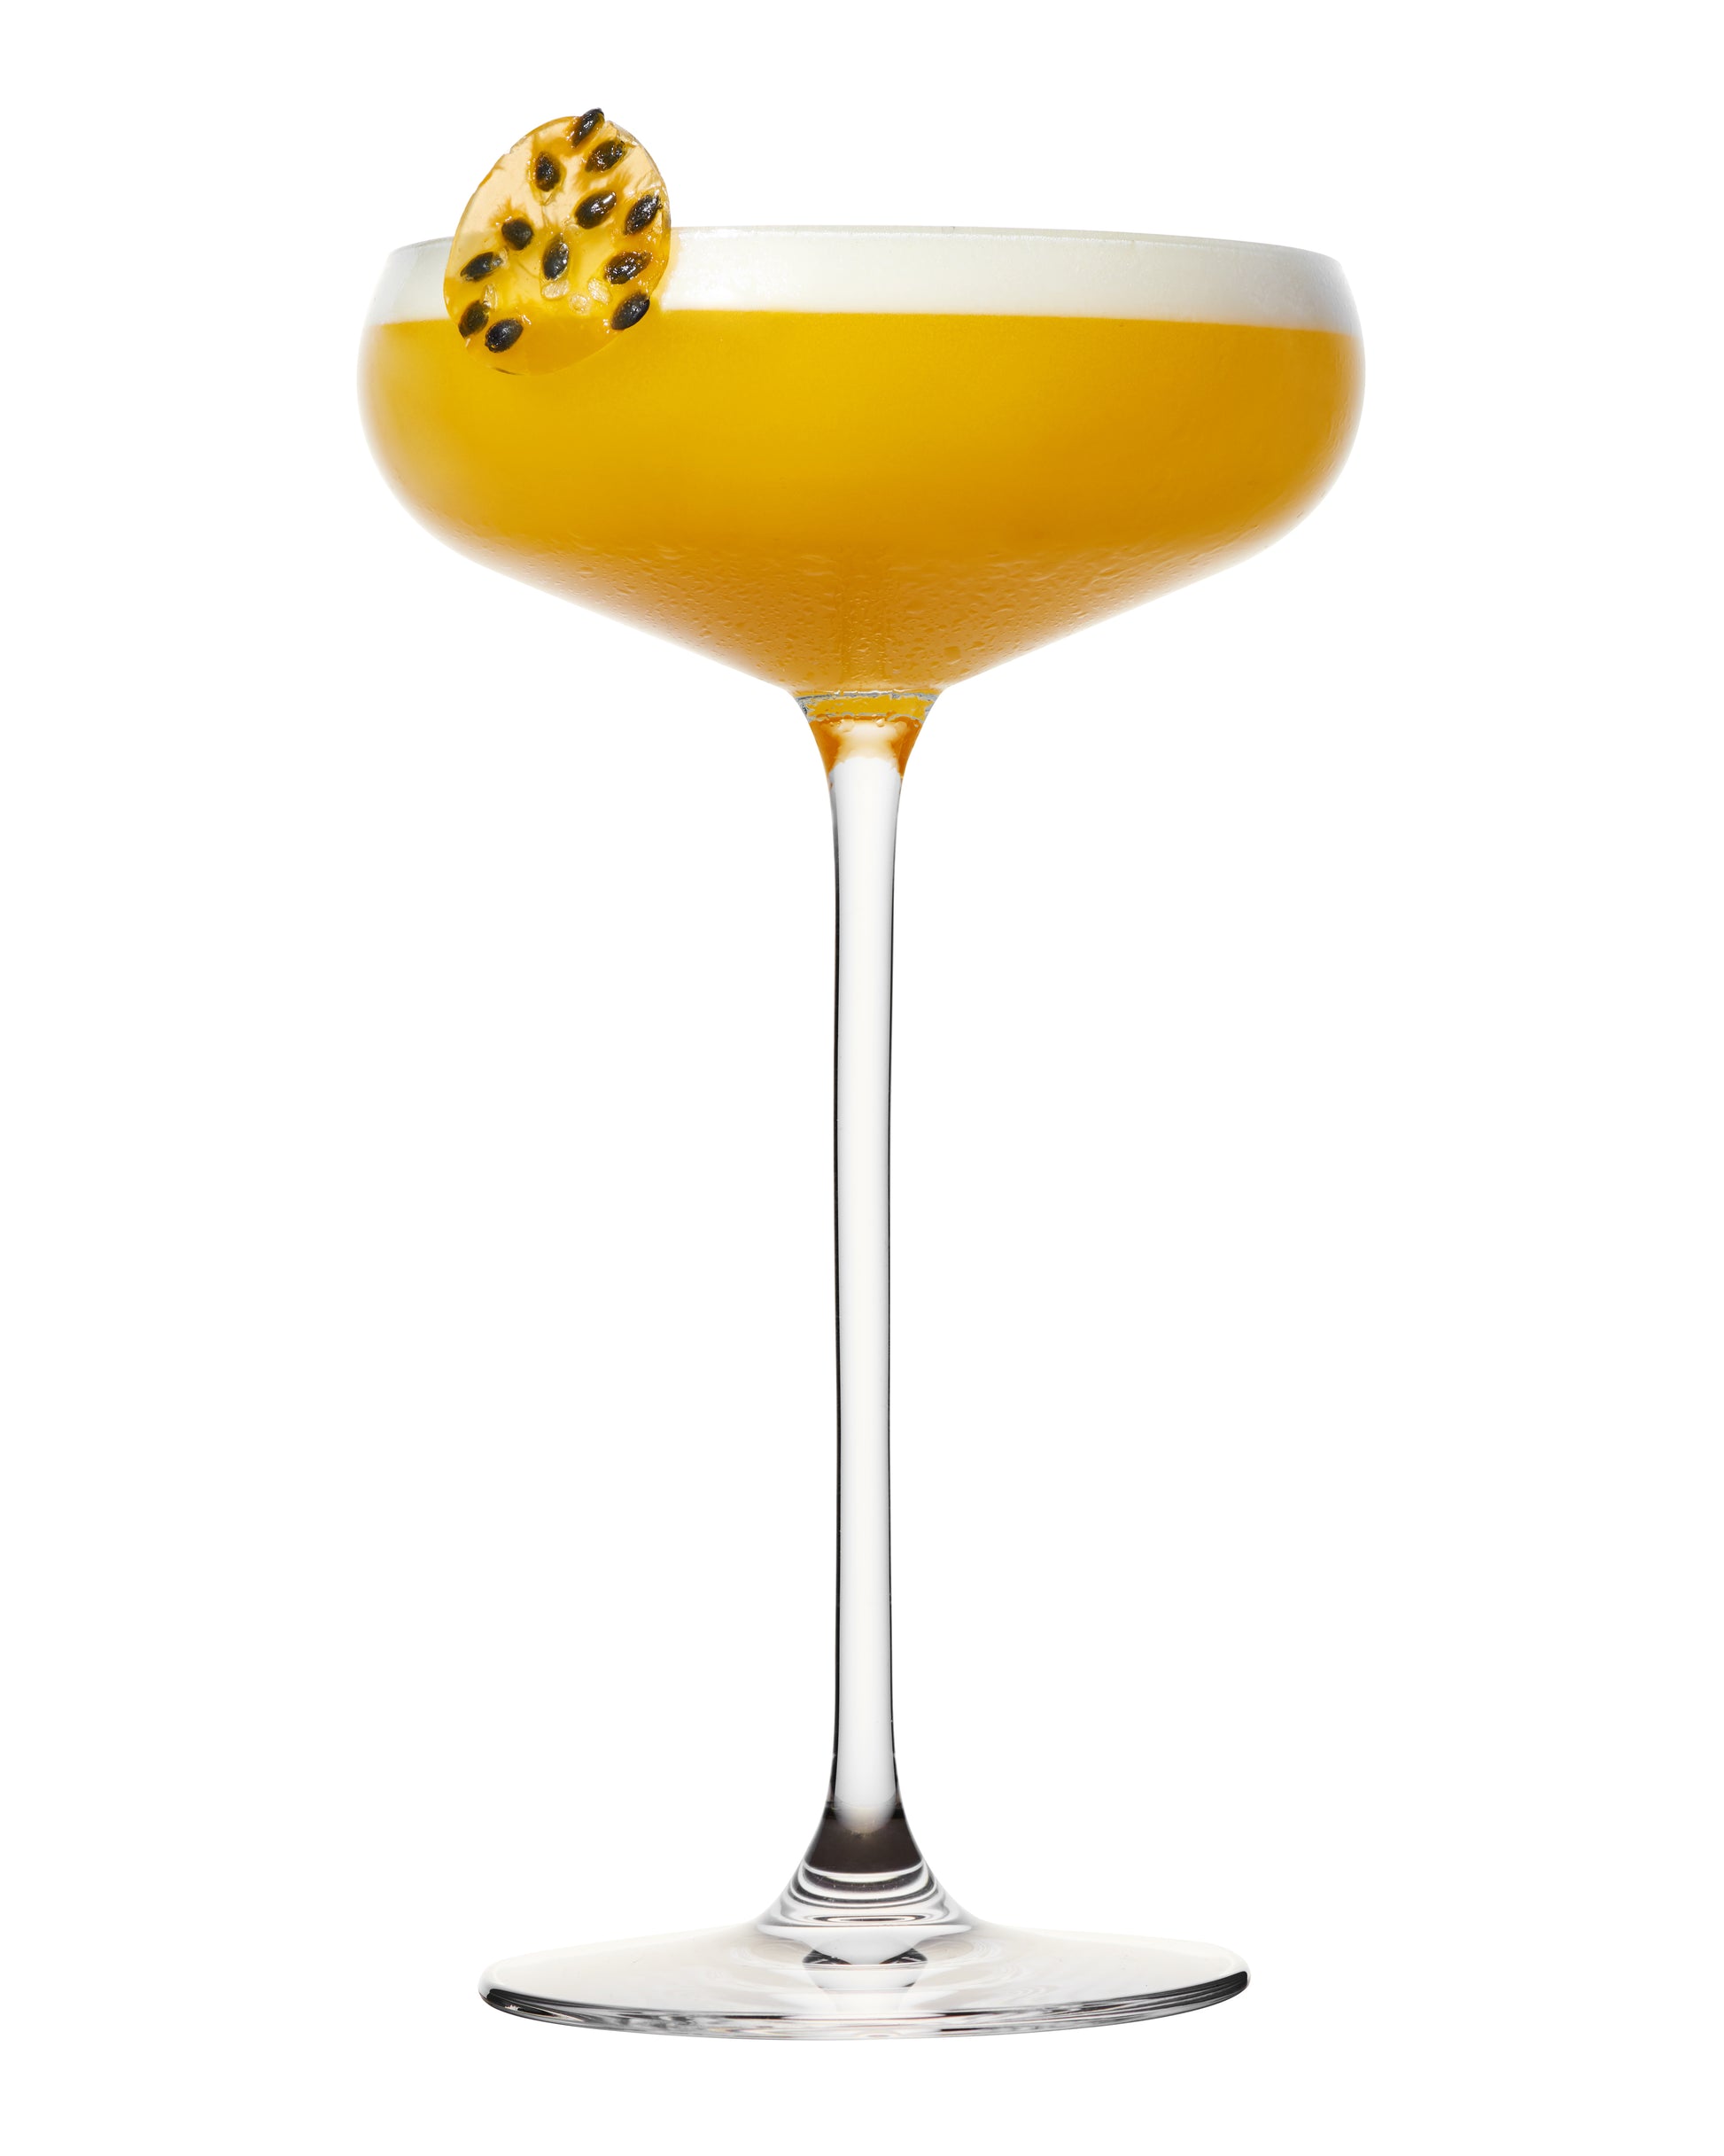 Pre-mixed pornstar martini cocktail